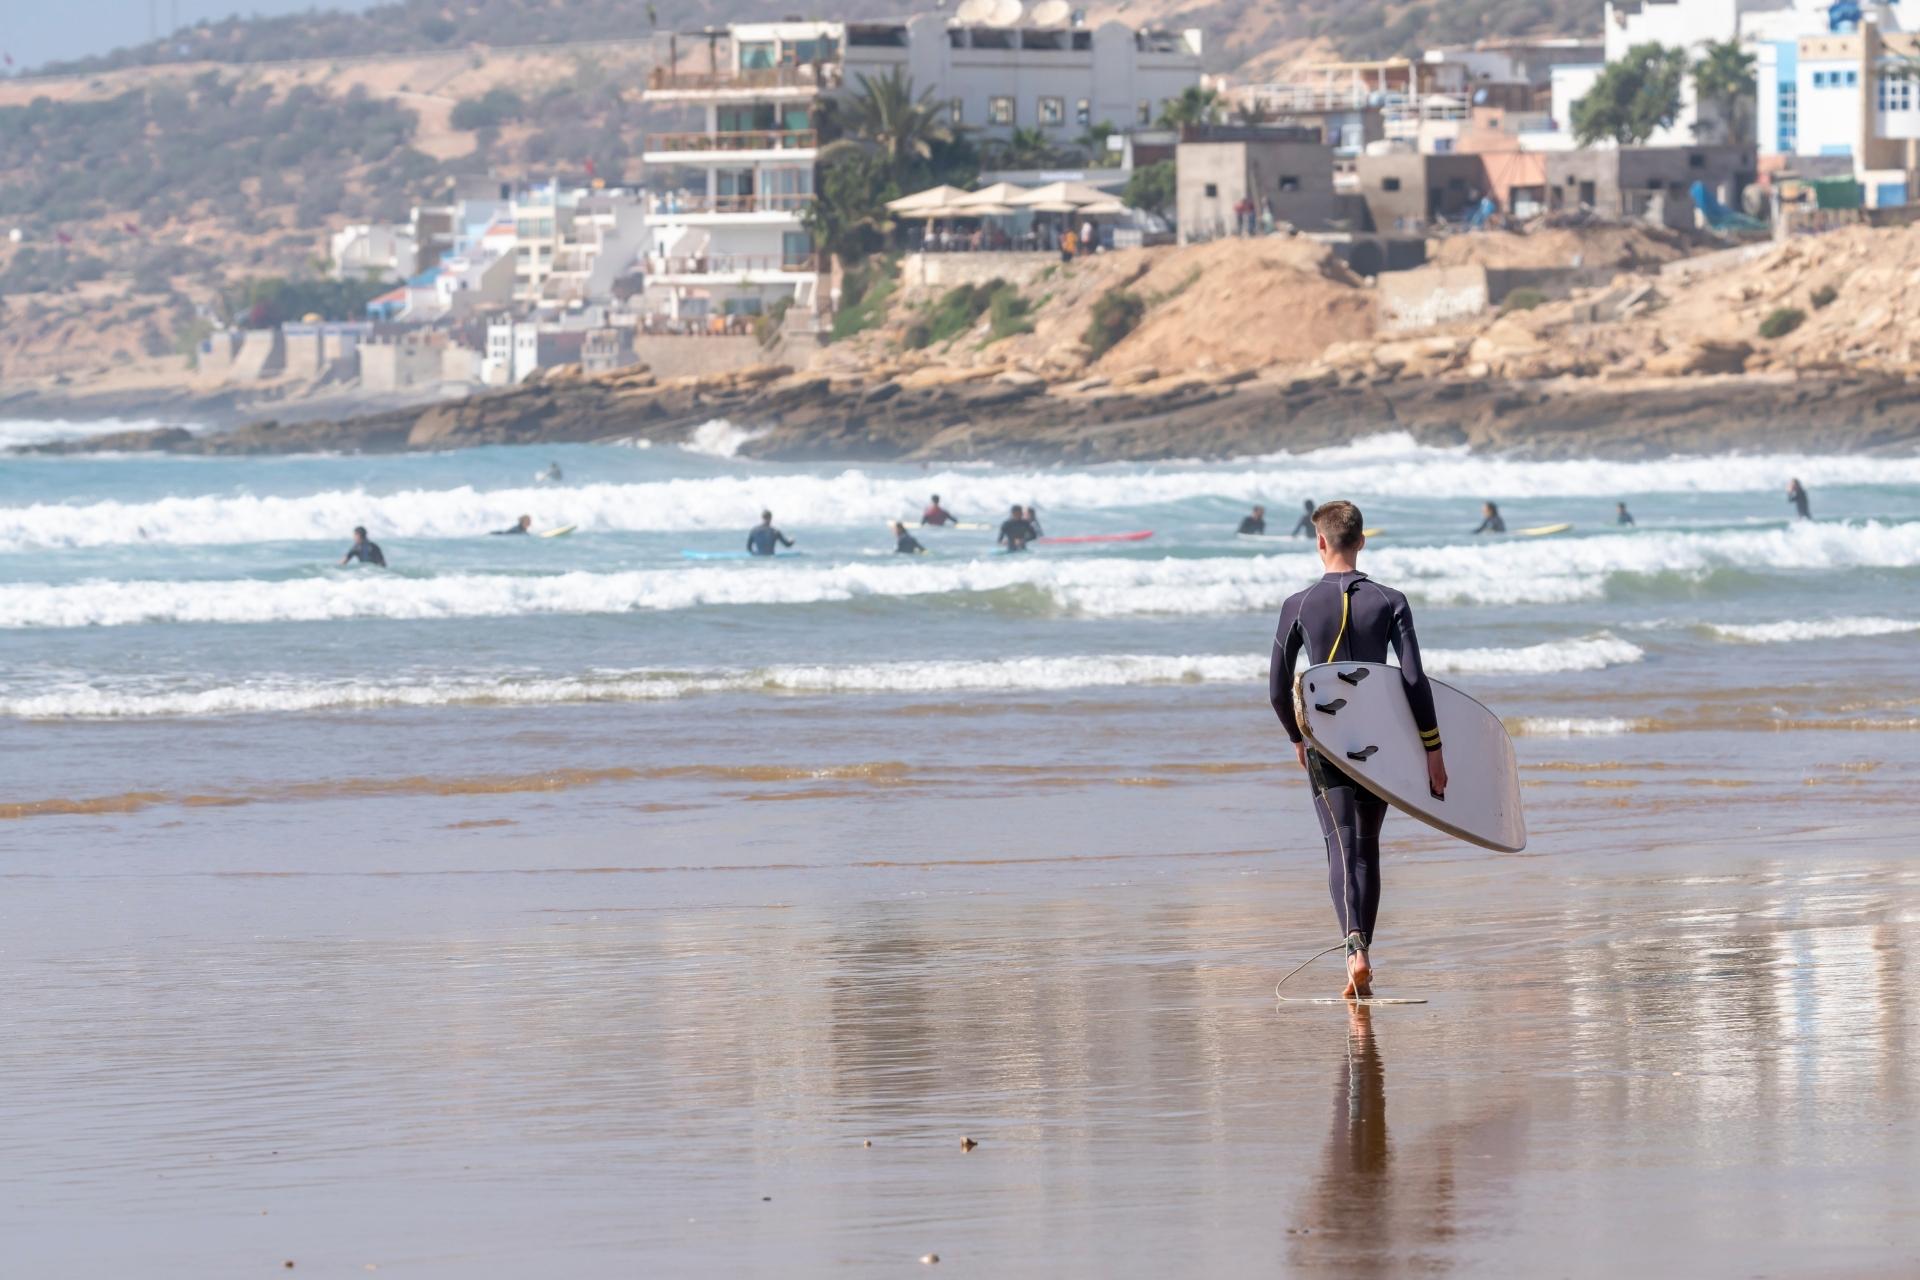 Morocco surfing village